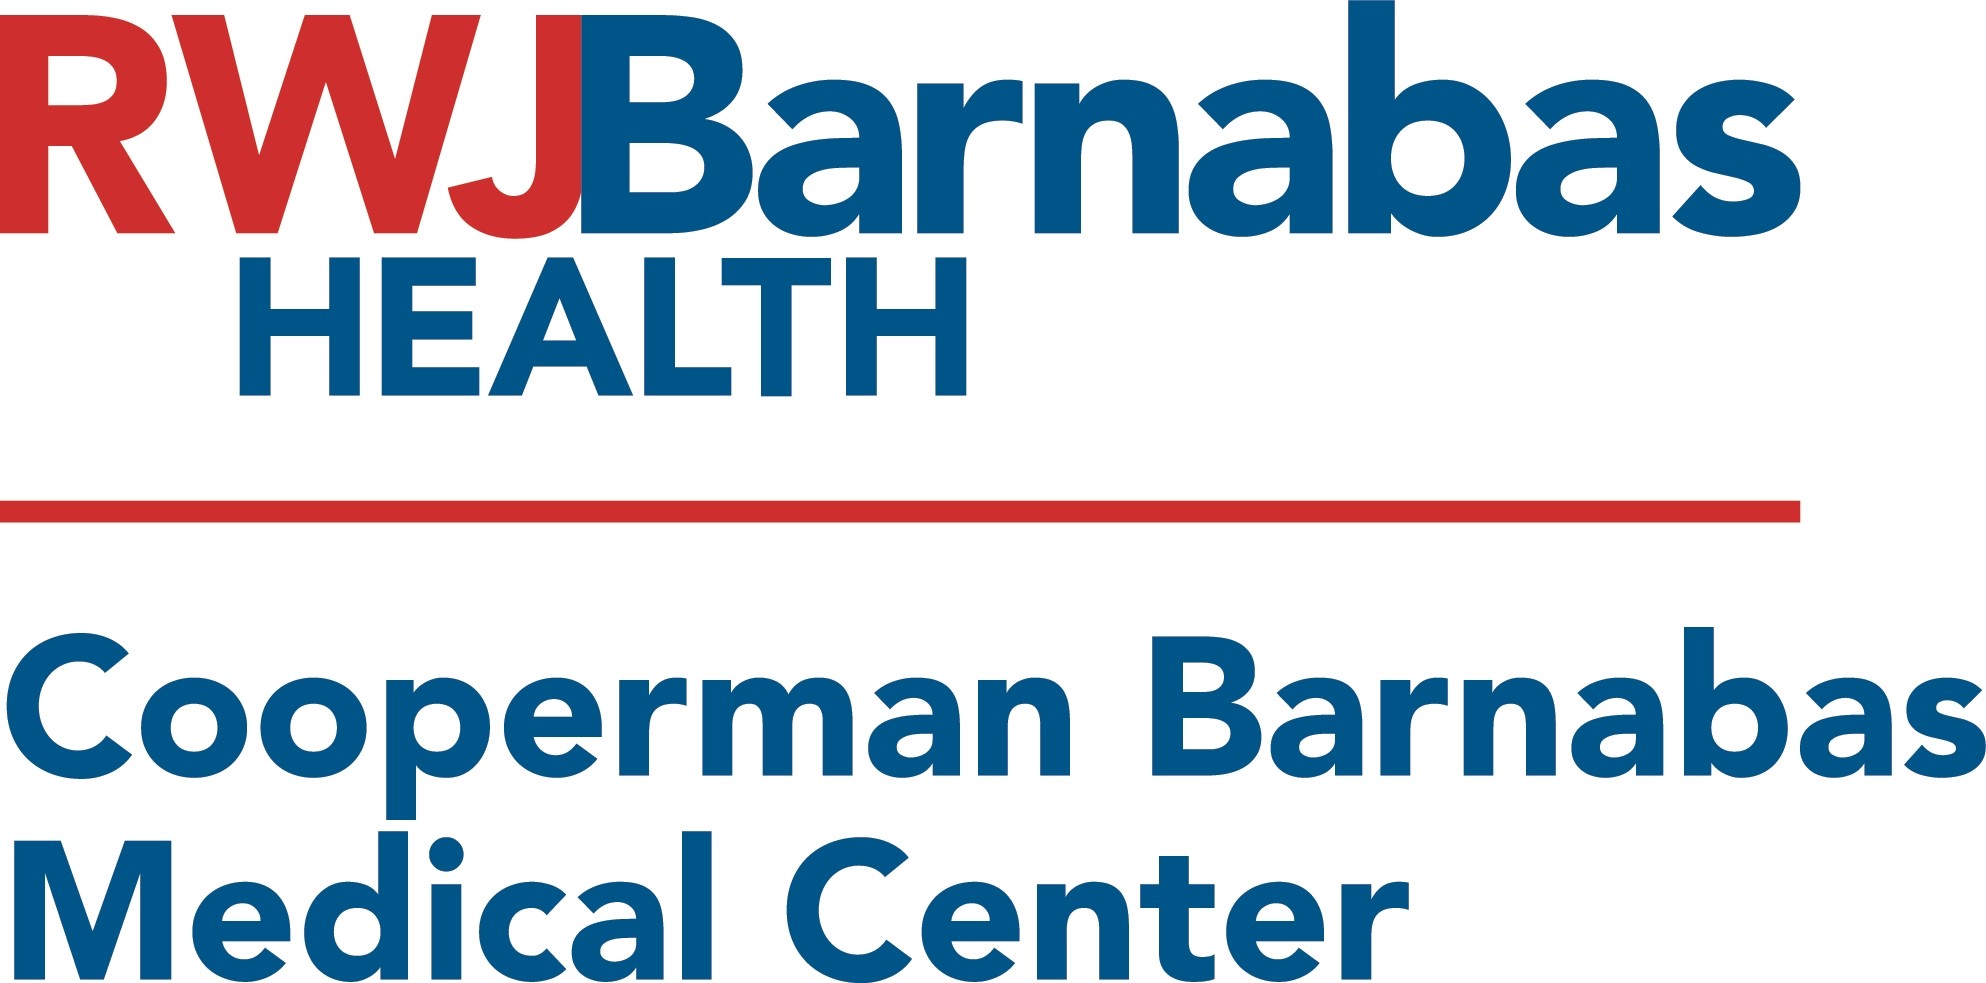 Cooperman Barnabas Medical Center logo